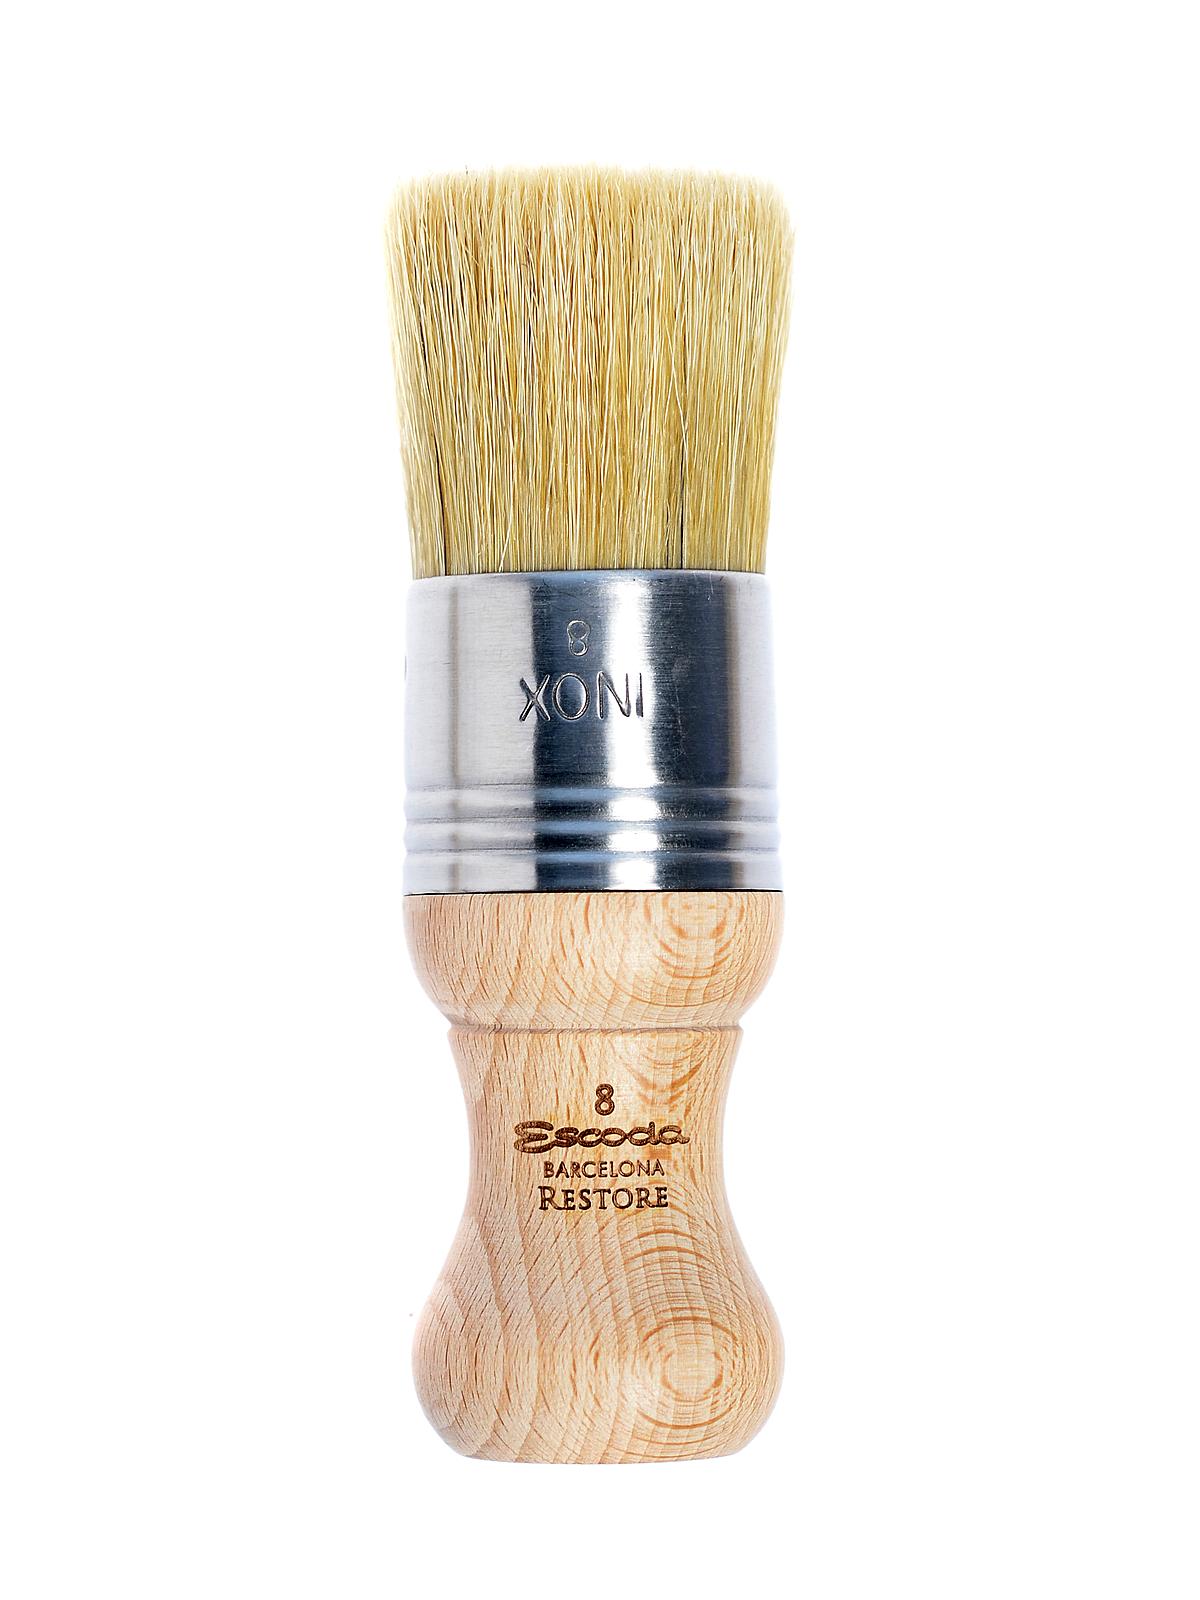 Restore Chalk Brushes 7701-8 Bristle Flat 8